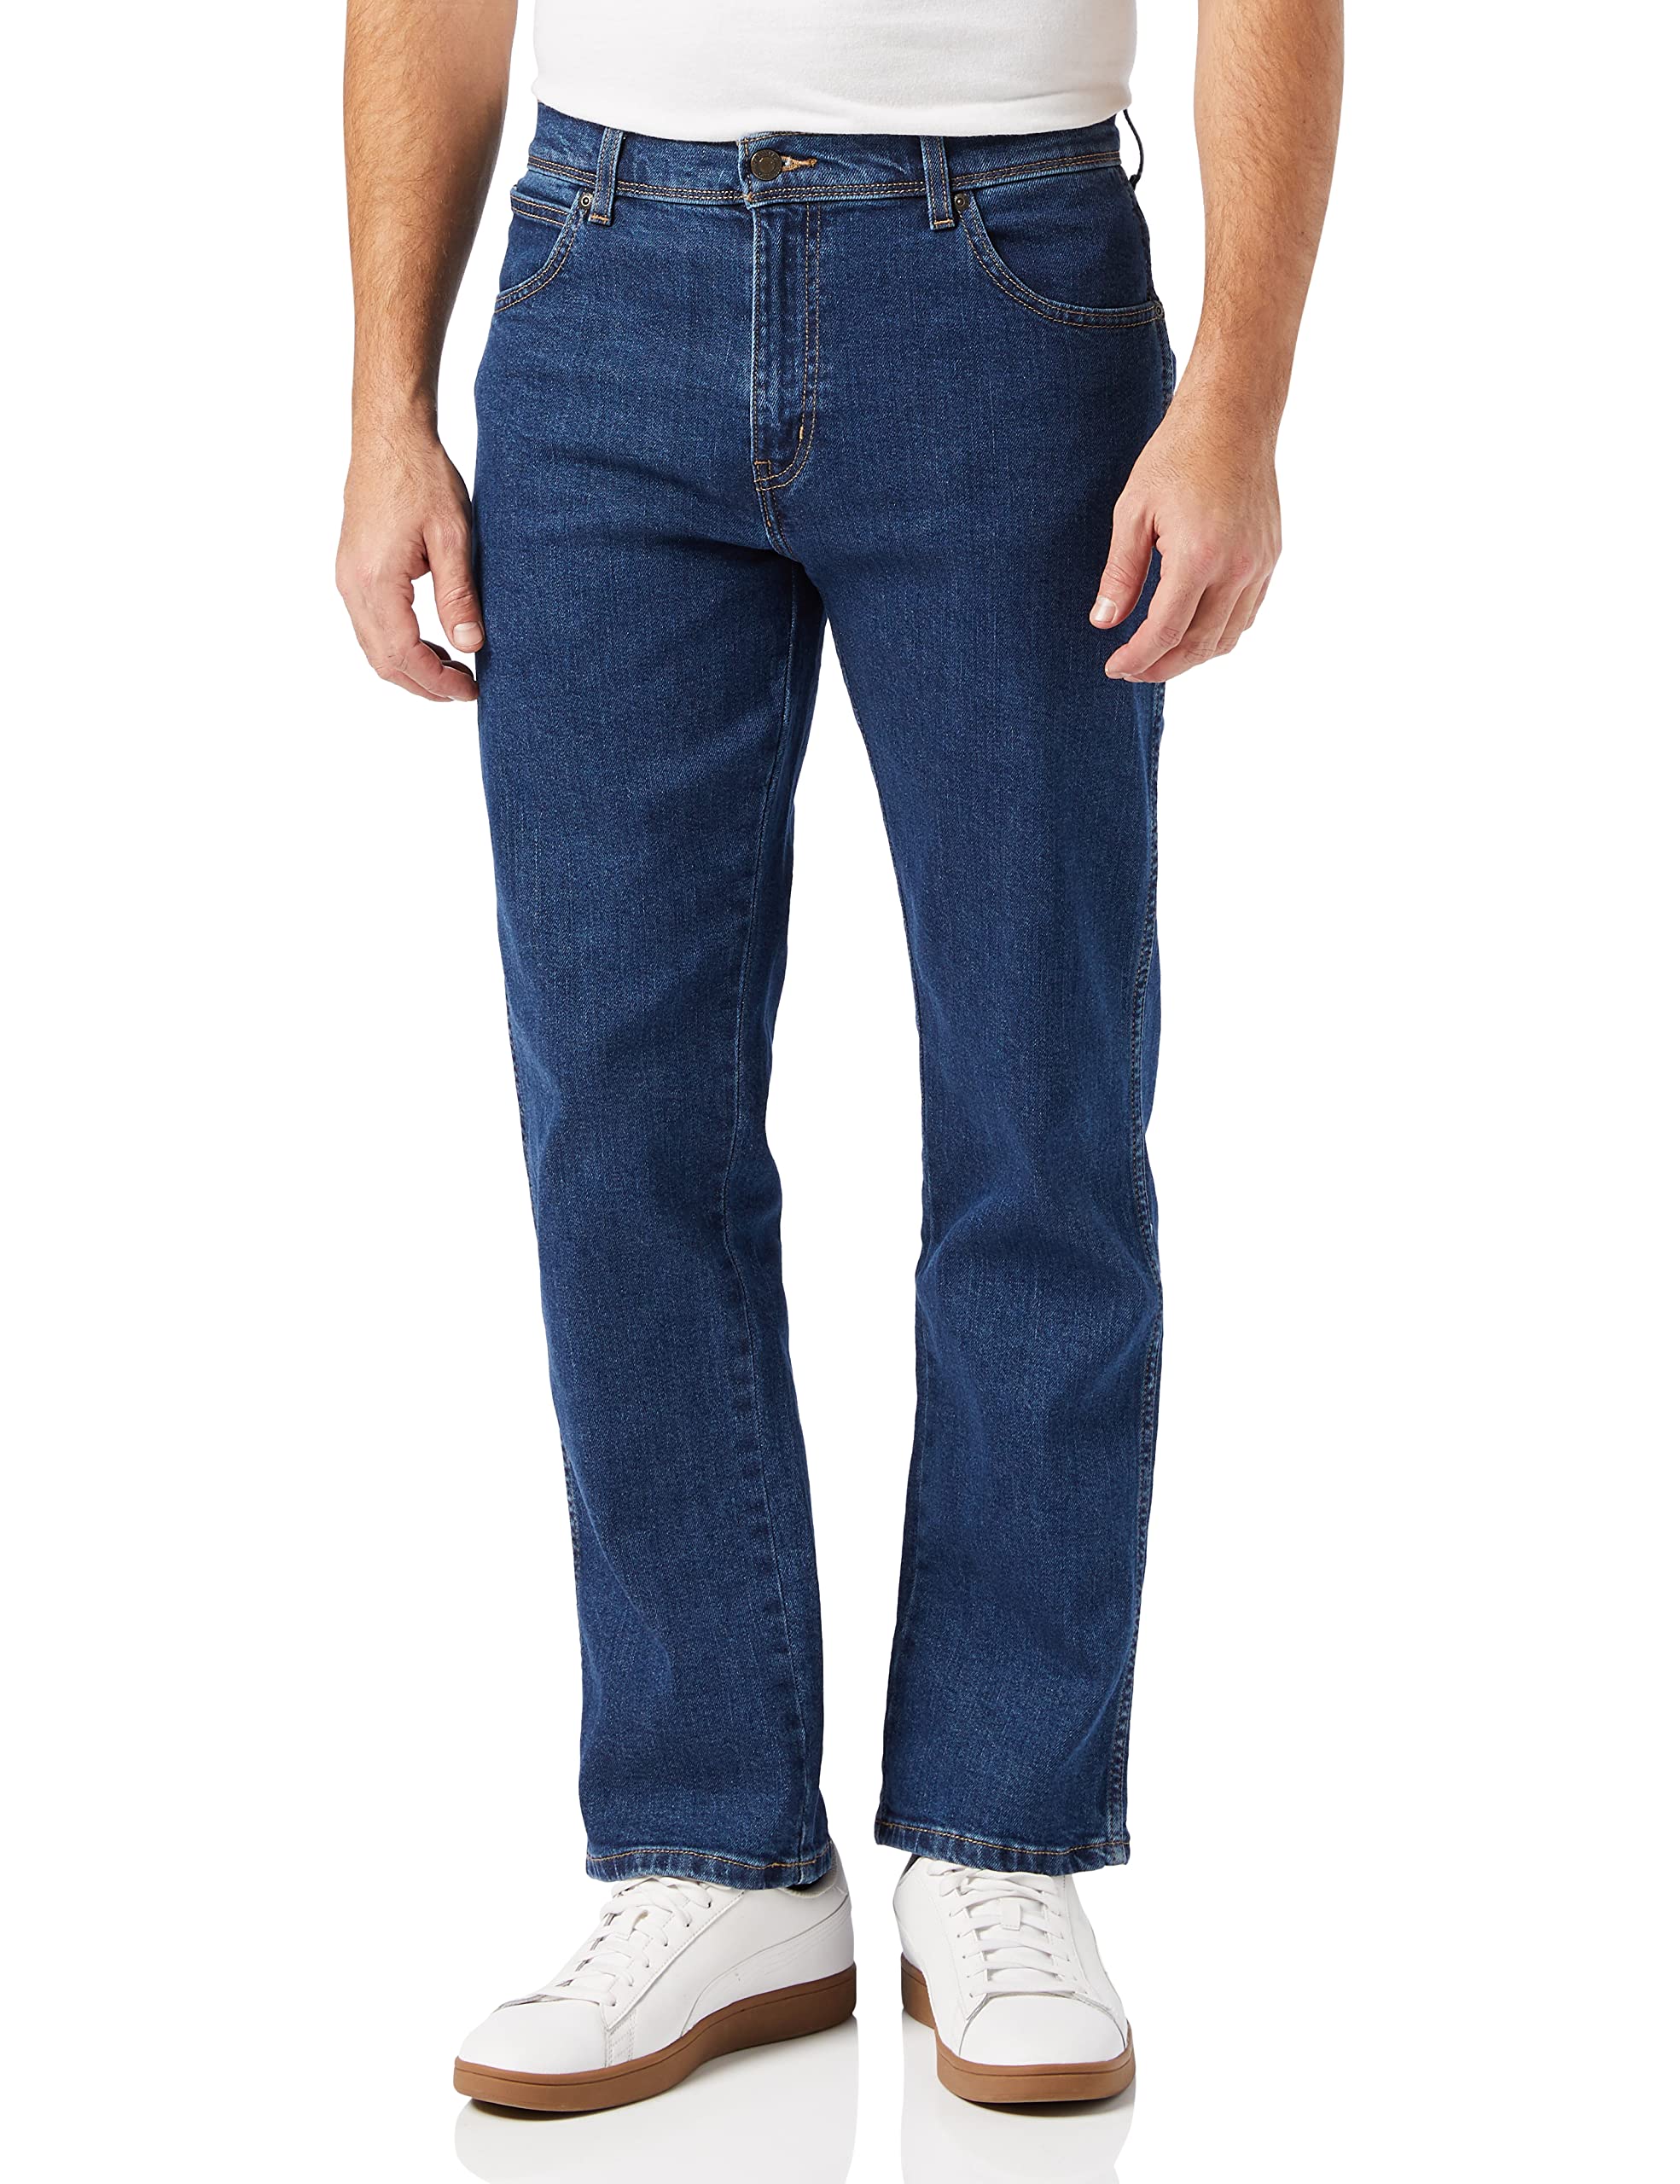 Wrangler Herren Regular Fit Jeans, Blau (Darkstone), 40W / 30L